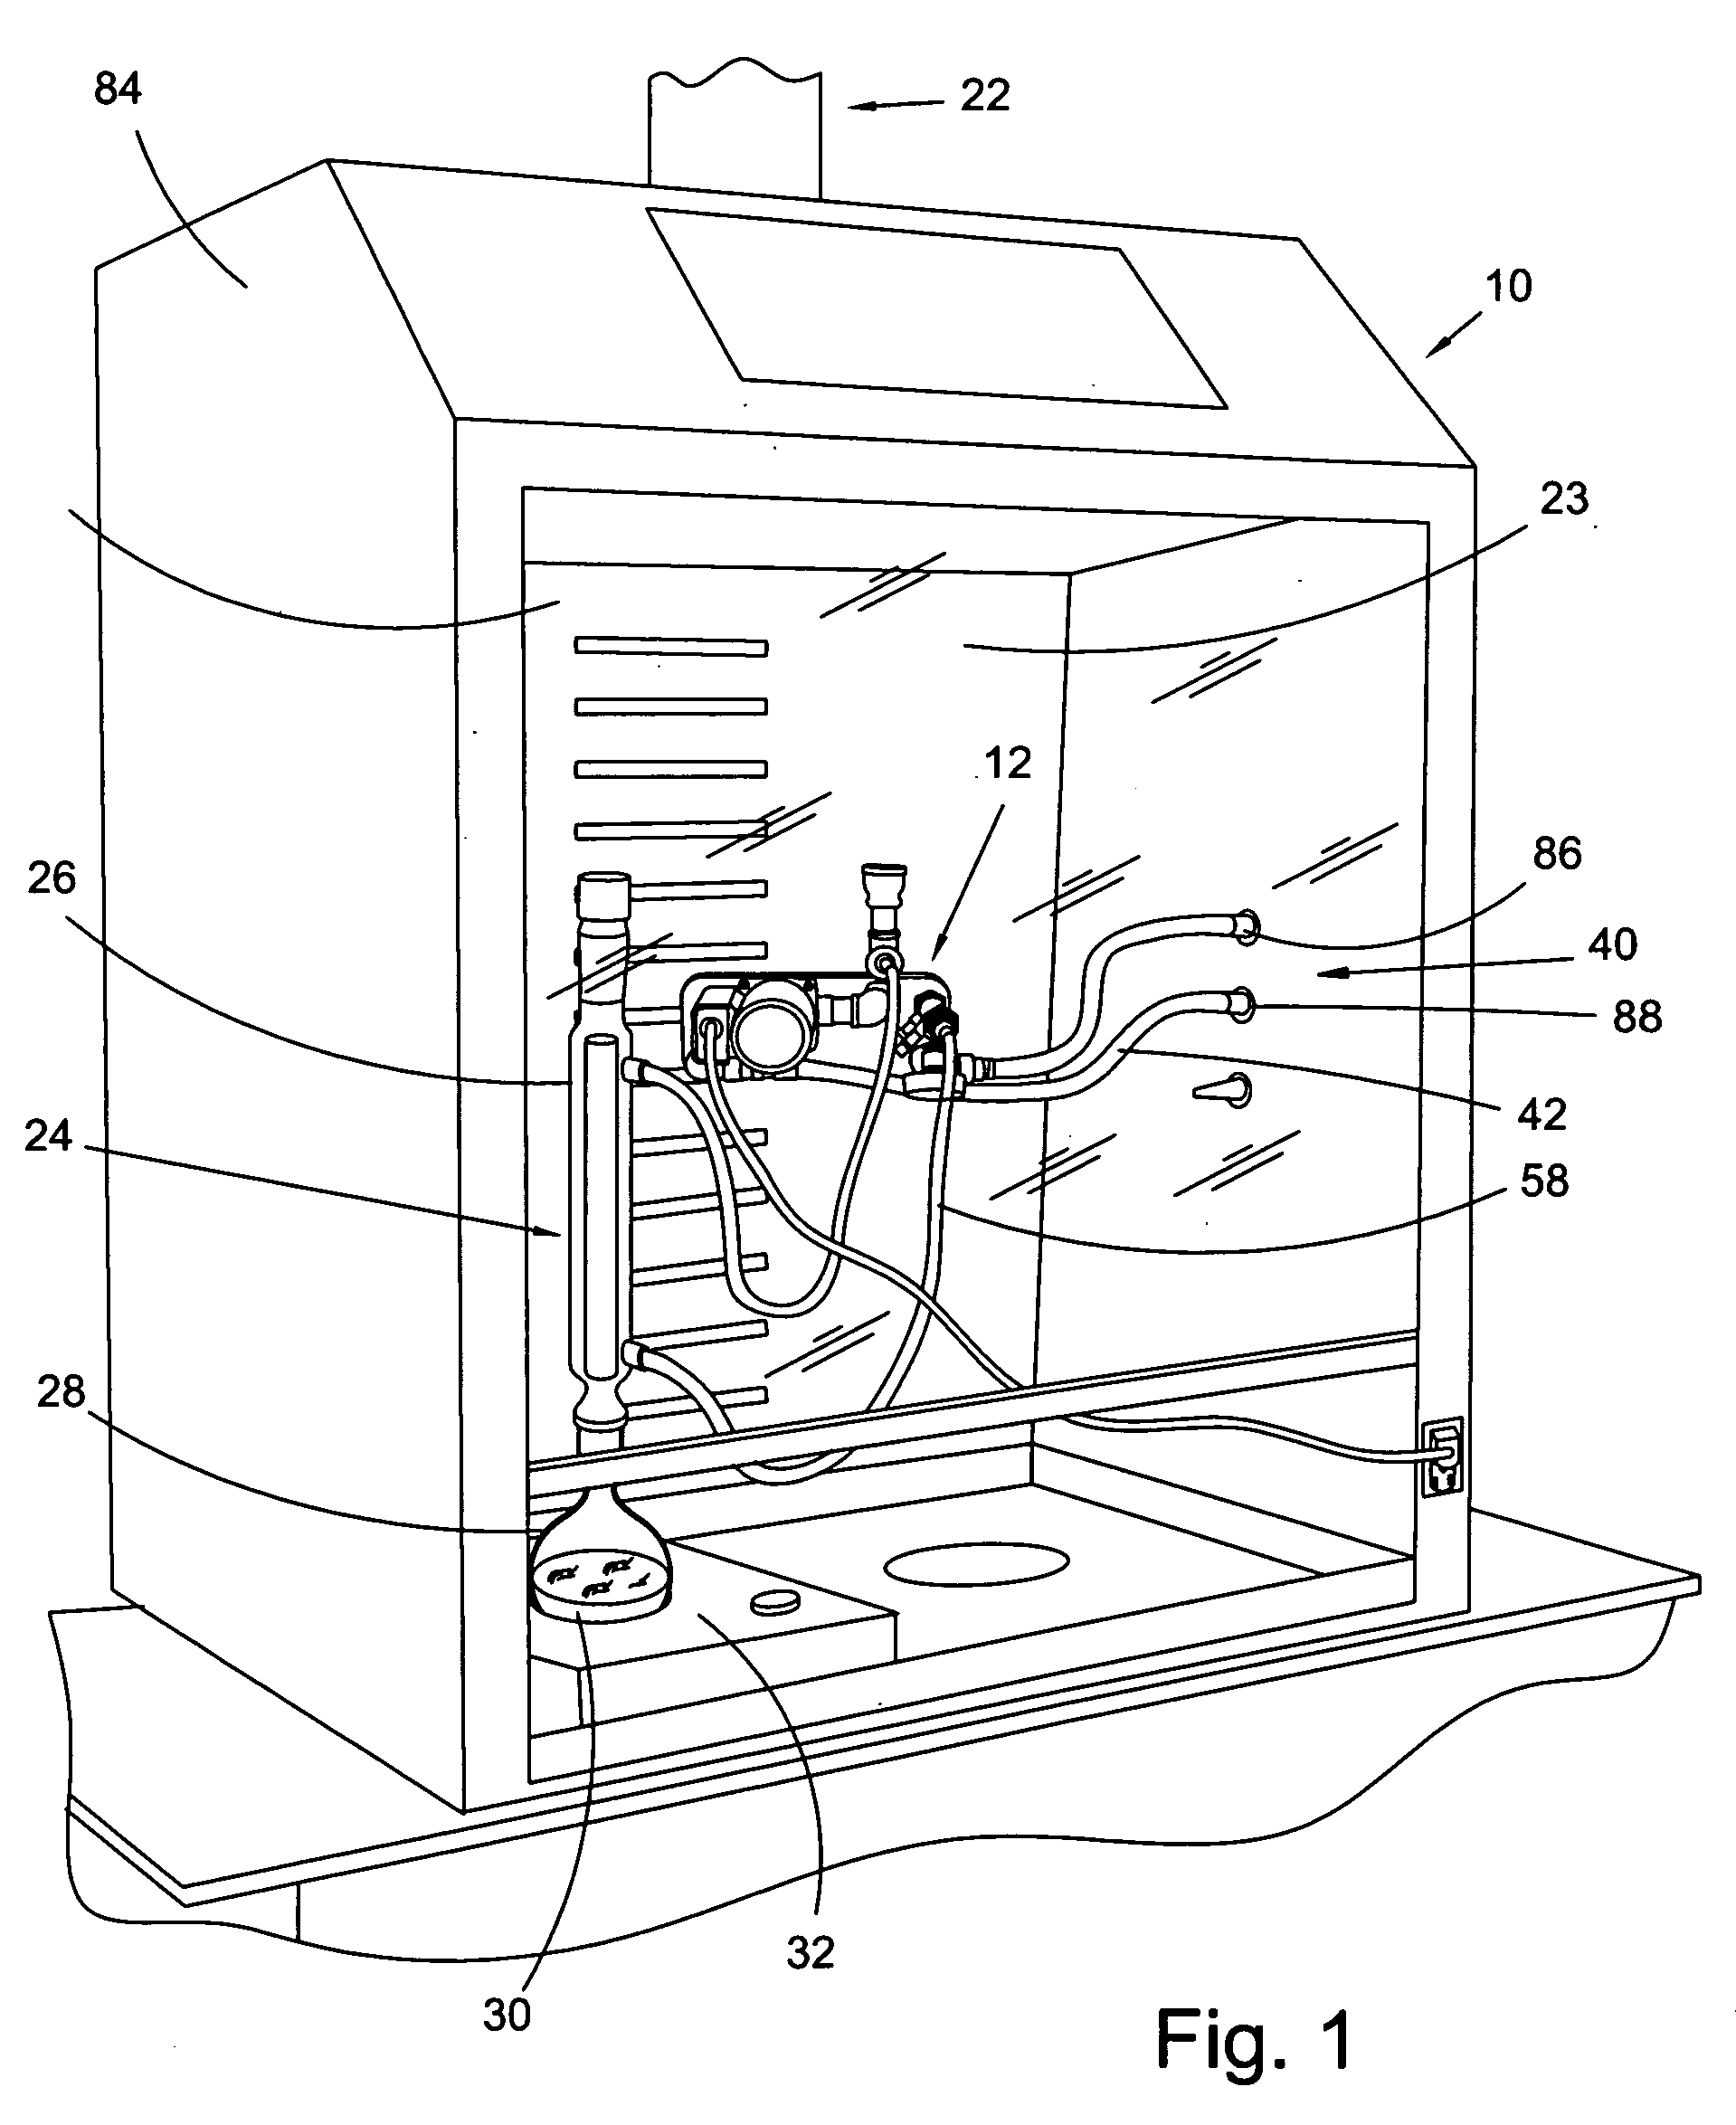 Apparatus for providing coolant fluid